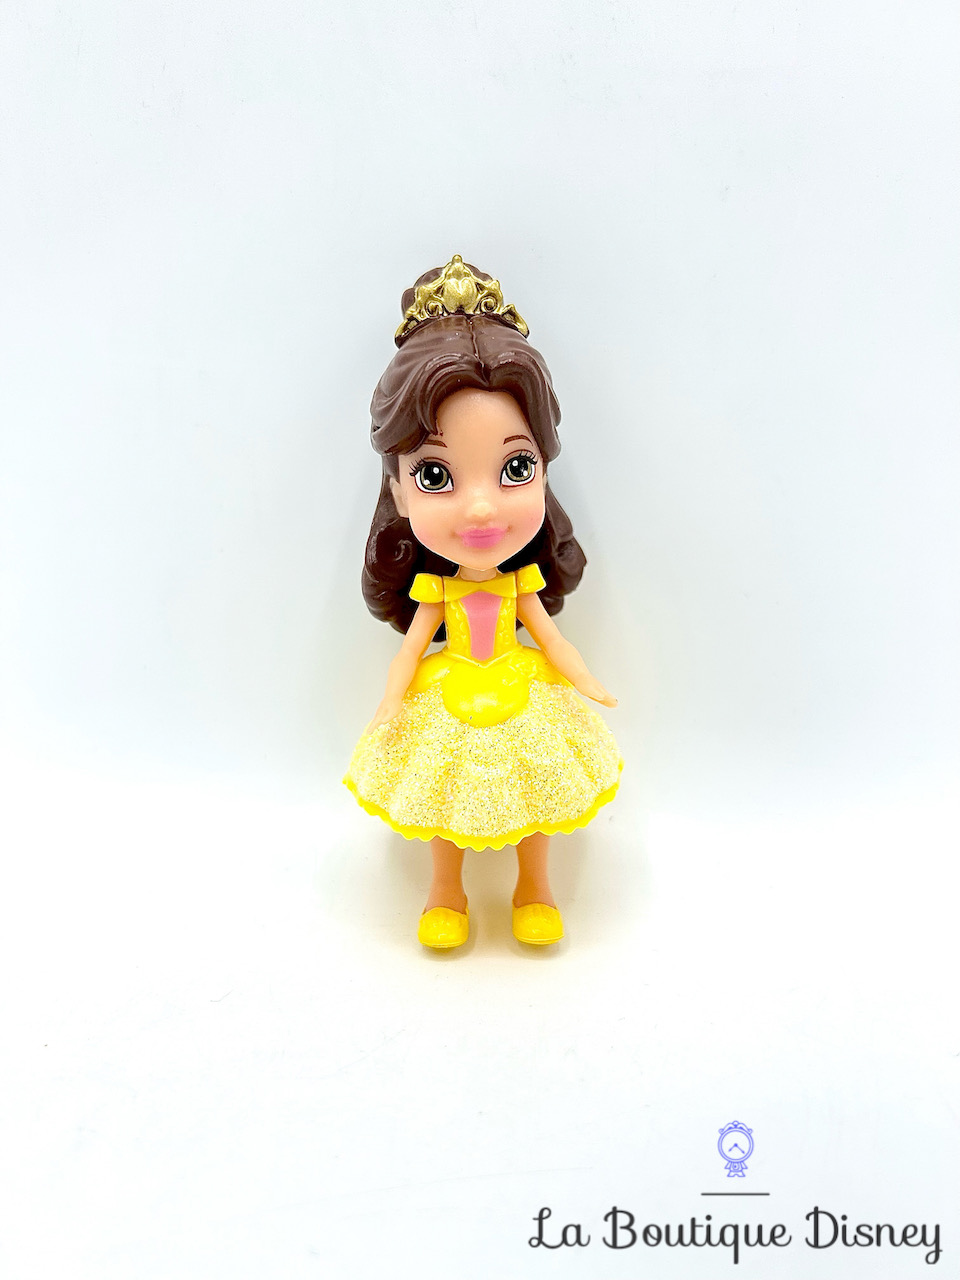 Disney Princess - Poupée Fashion princesse assortie - Poupées